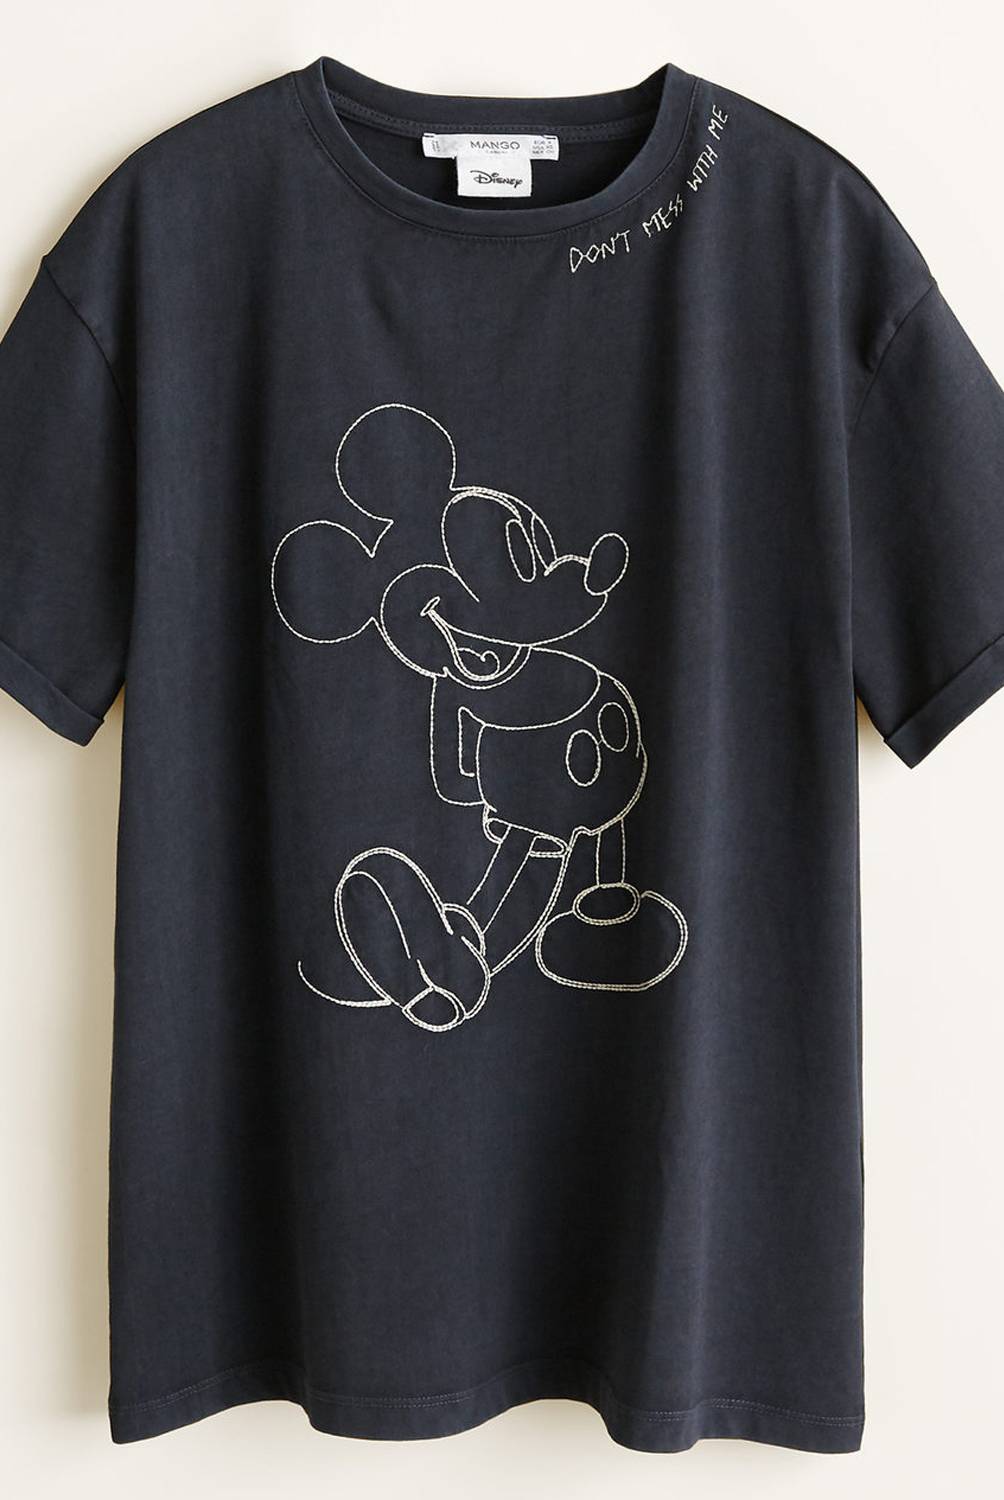 MANGO - Camiseta Mickey1 33055783